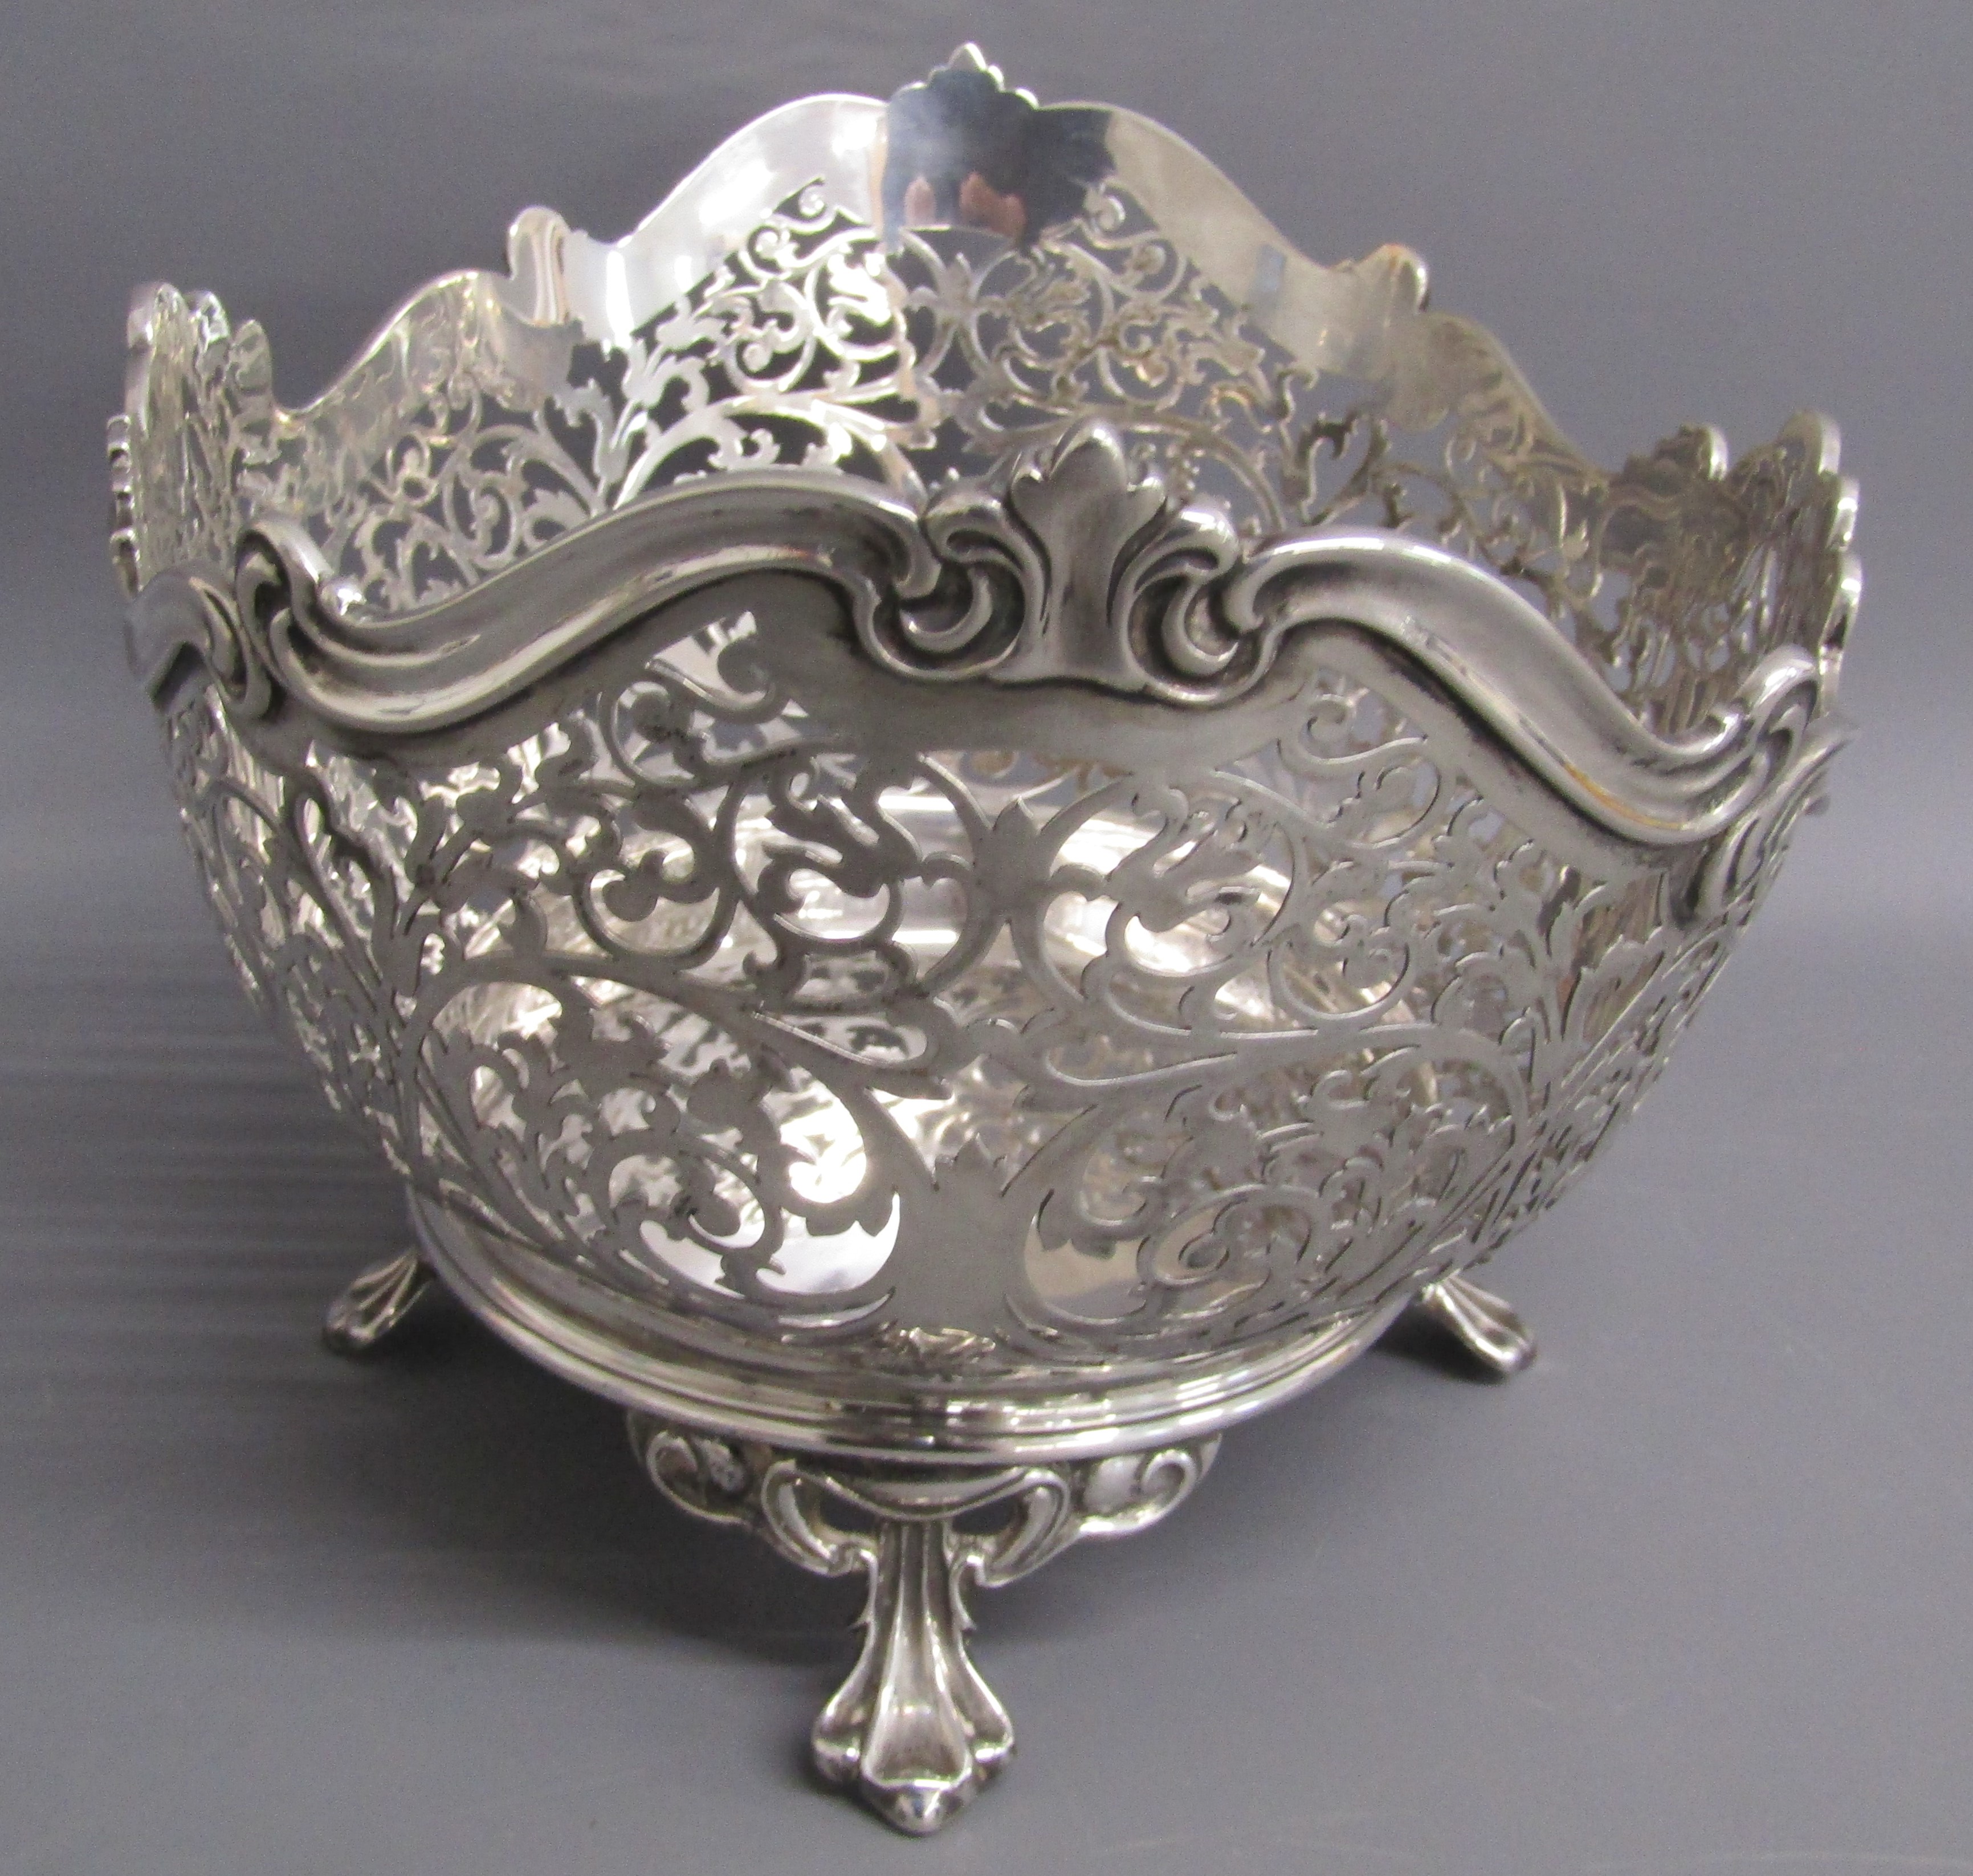 Atkin Brothers Sheffield 1927 silver footed bowl with pierced decoration - approx. 27.5cm x 19cm x - Bild 2 aus 11